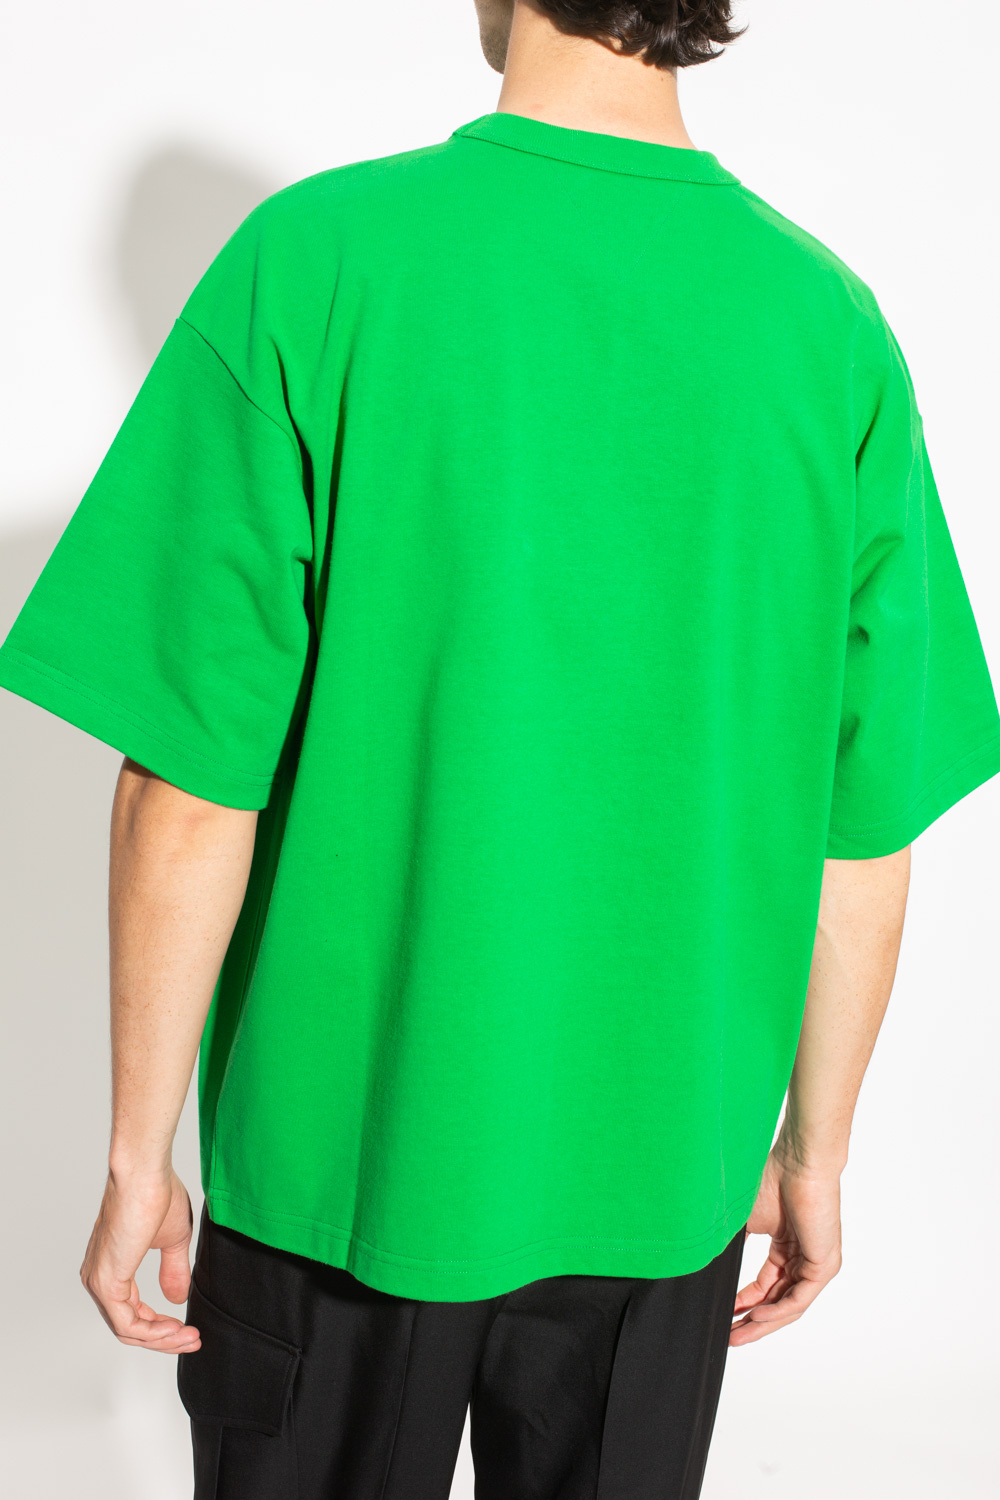 Bottega Veneta® Men's Relaxed Fit Double Layer Cotton T-Shirt in Petrol /  Chalk. Shop online now.